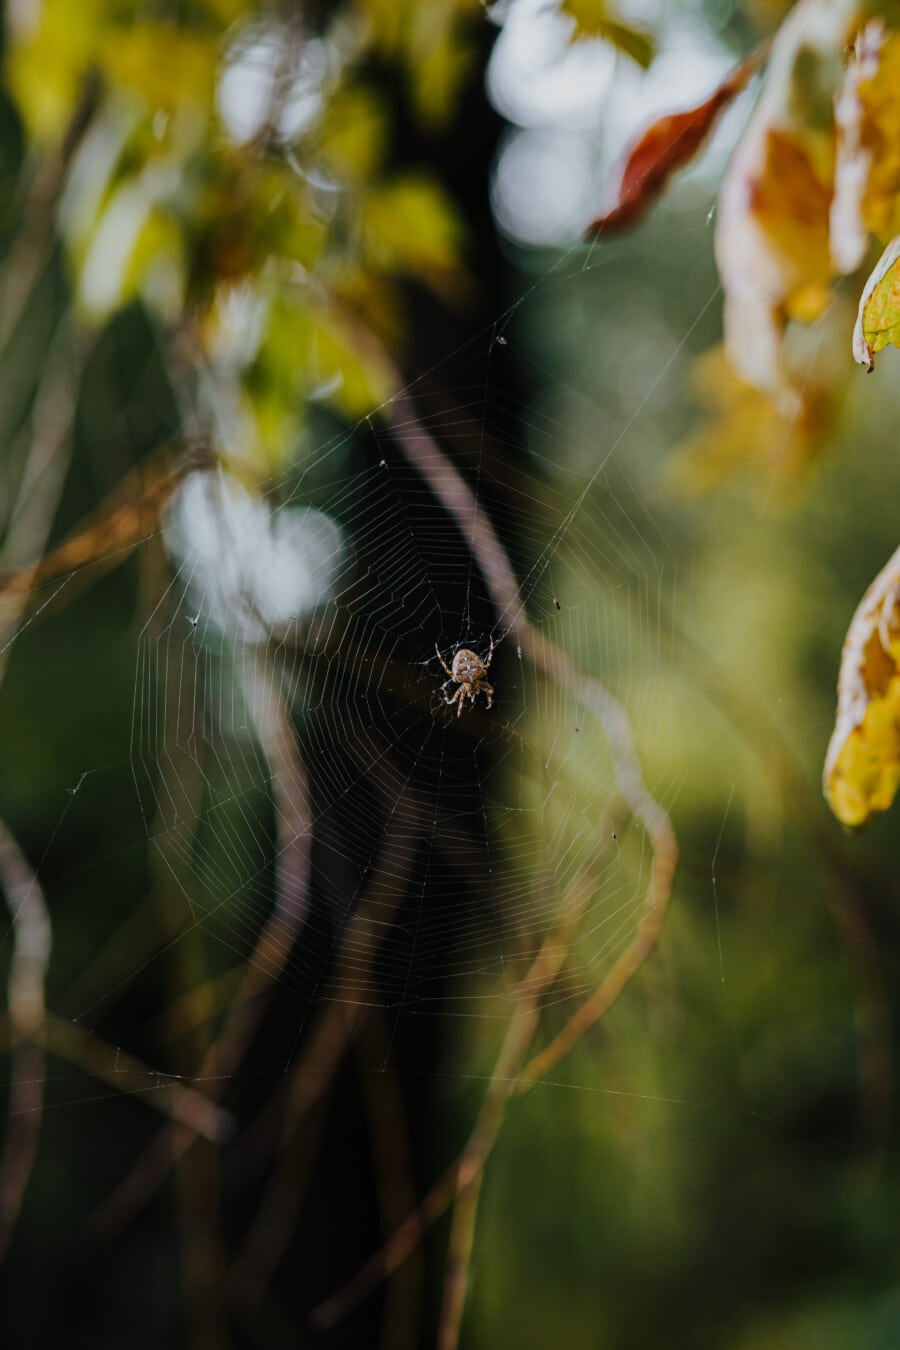 spider, spider web, spiderweb, trap, nature, arachnid, insect, outdoors, wildlife, cobweb